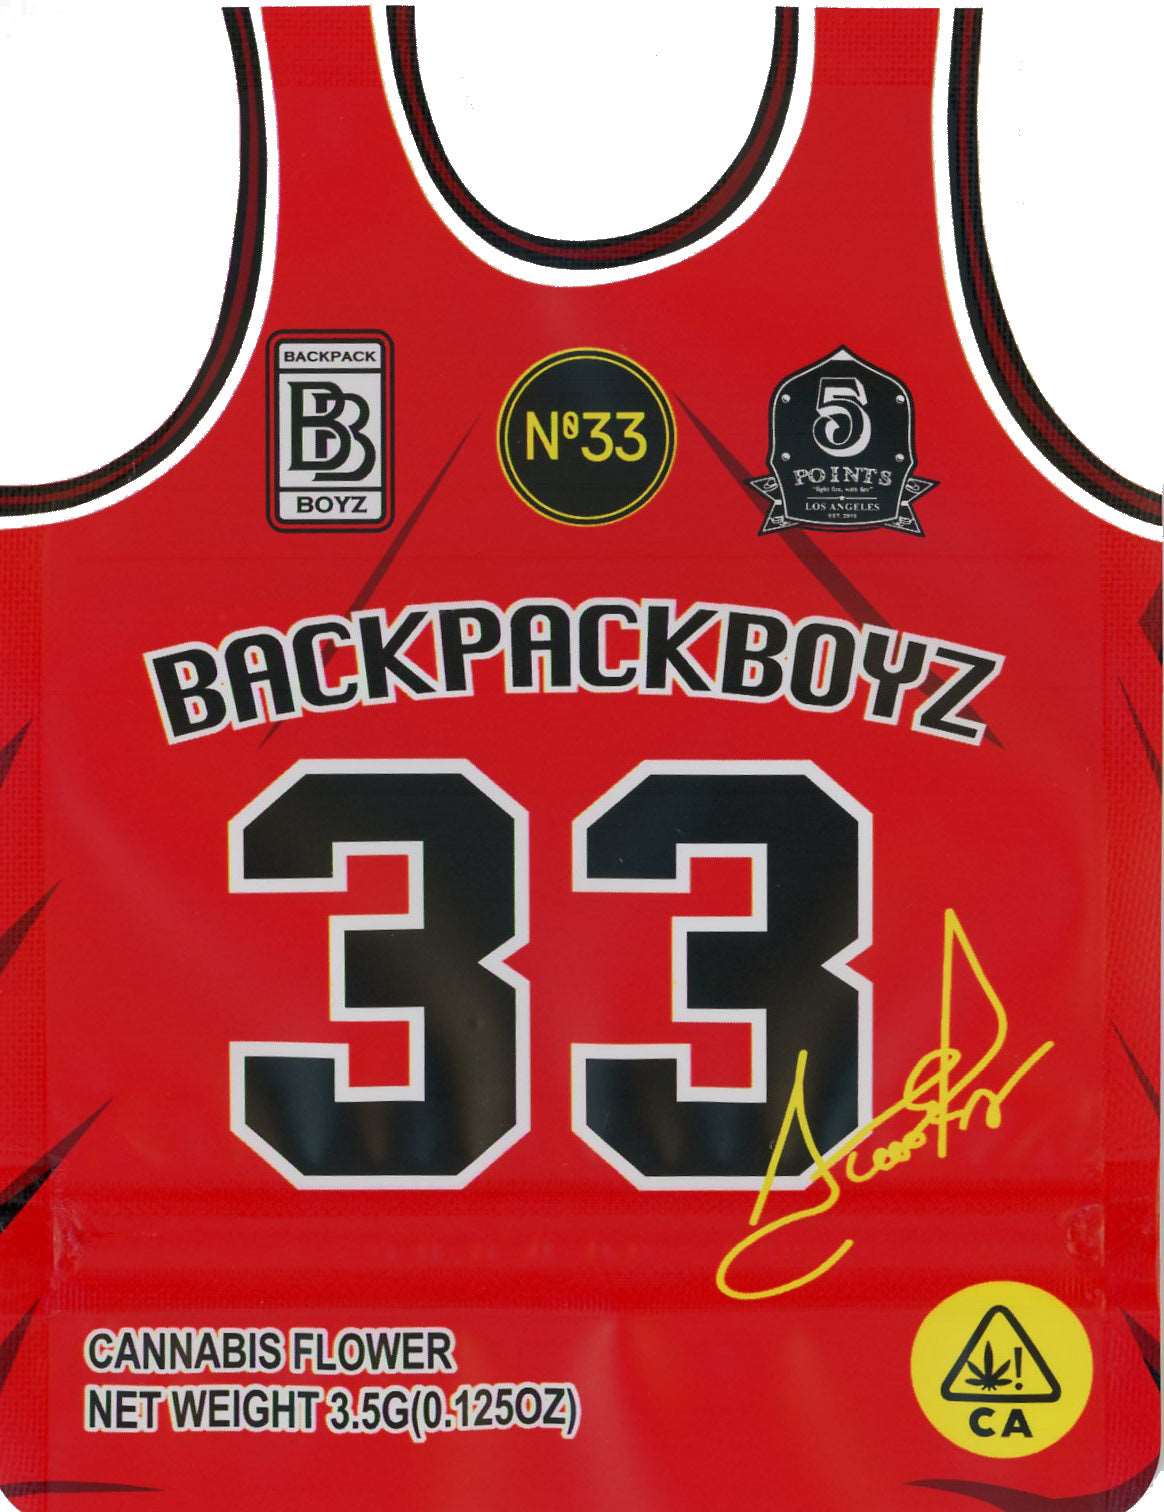 Backpack Boyz Mylar Bags 3.5g - N33